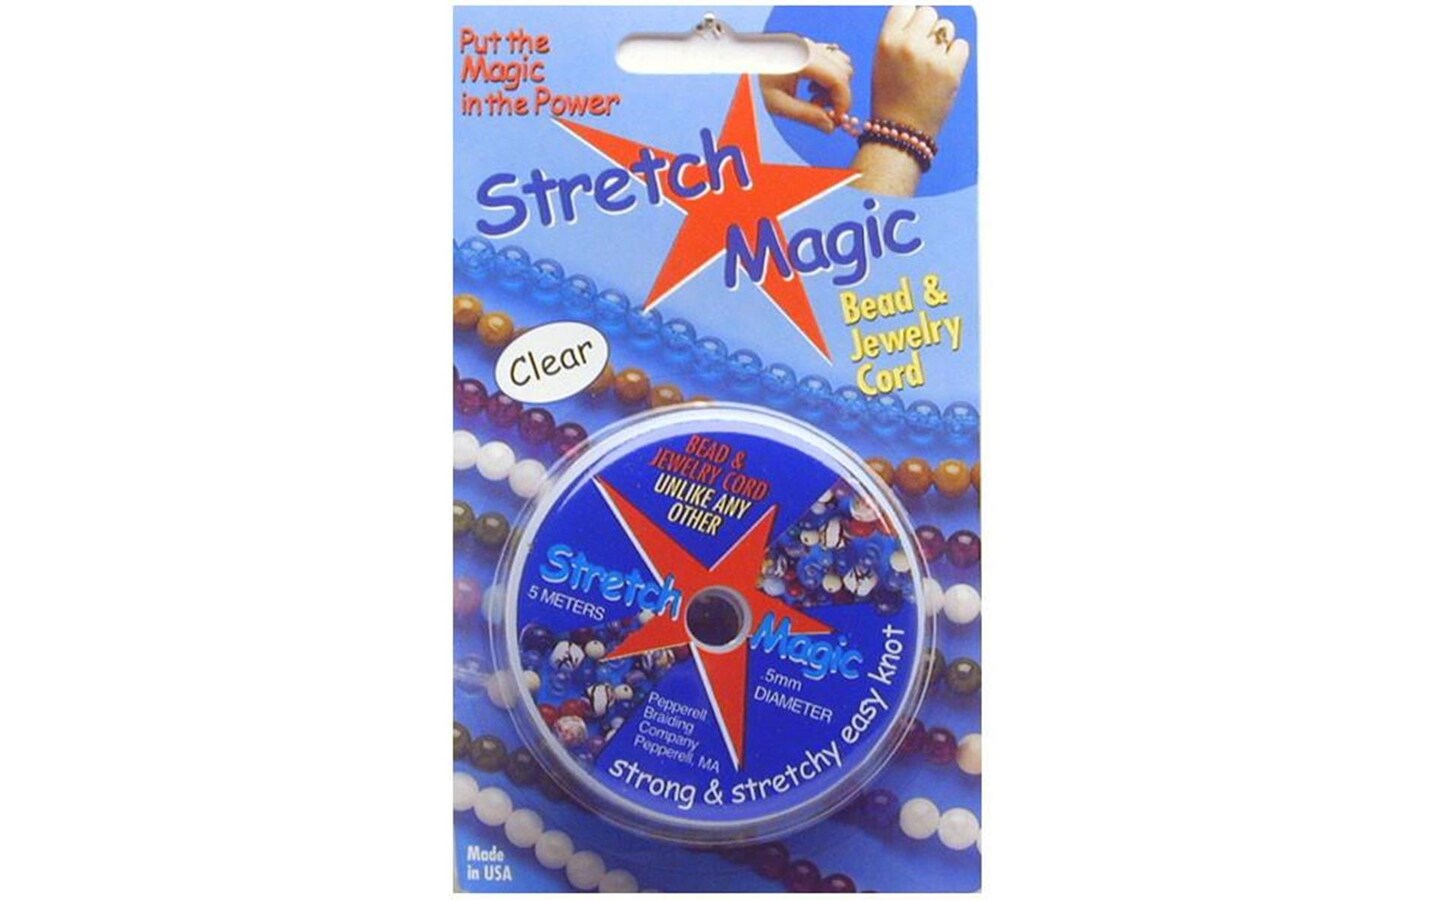 Stretch Magic Bead & Jewelry Cord .5mmX10m-Clear - 725879206512